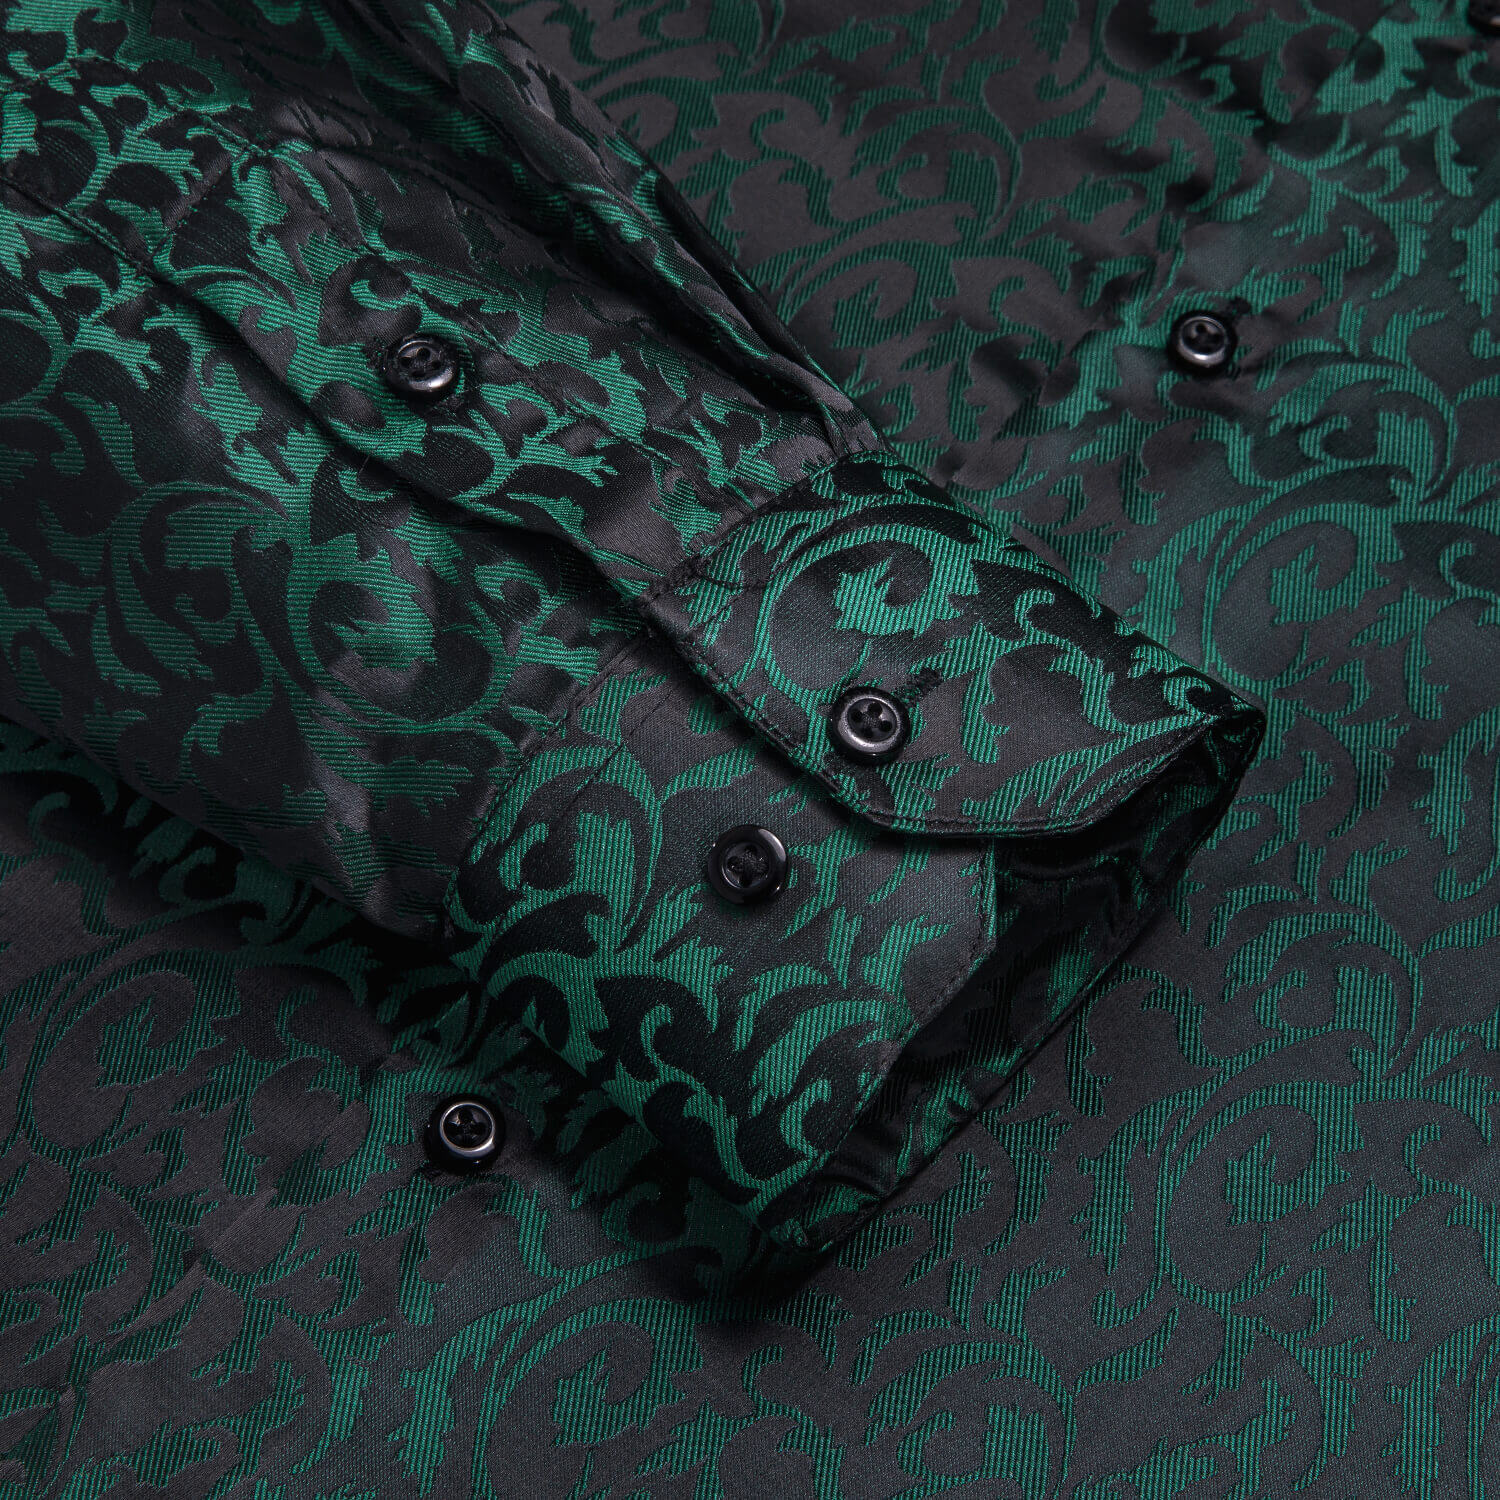 Hi-Tie Long Sleeve Shirt Dark Green Jacquard Floral Silk Shirt for Men